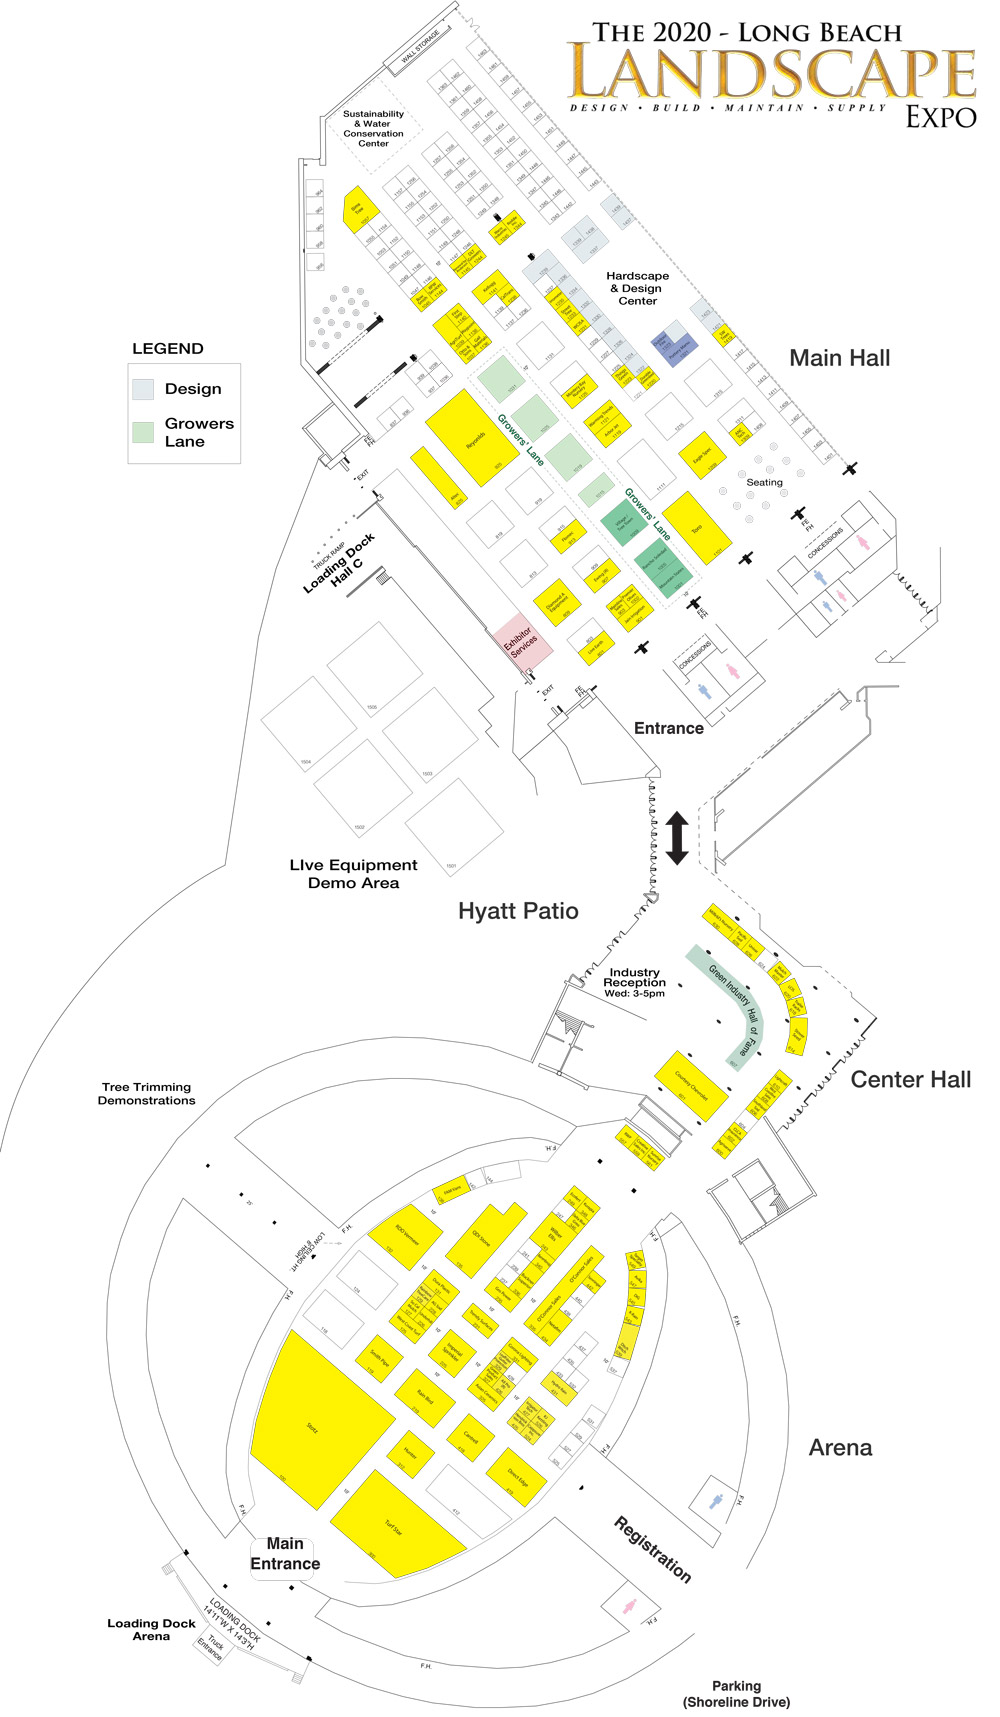 The Landscape Expo 2020 Floor Plan